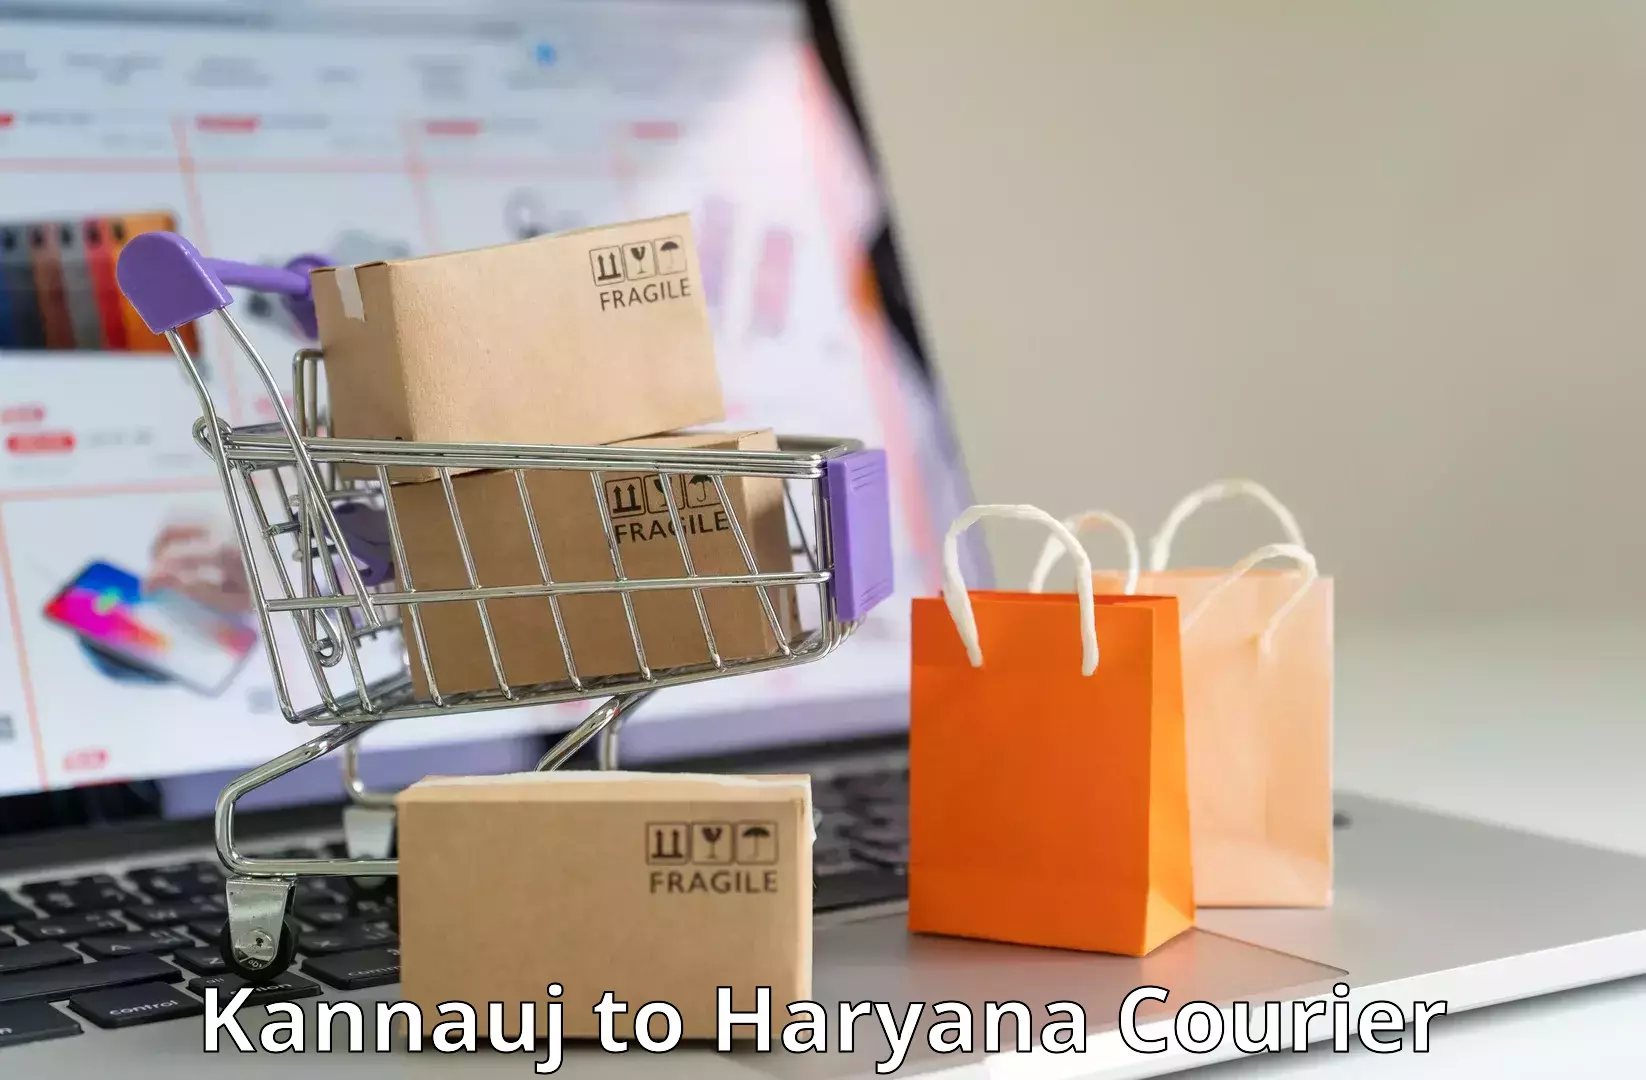 Logistics service provider Kannauj to Hansi